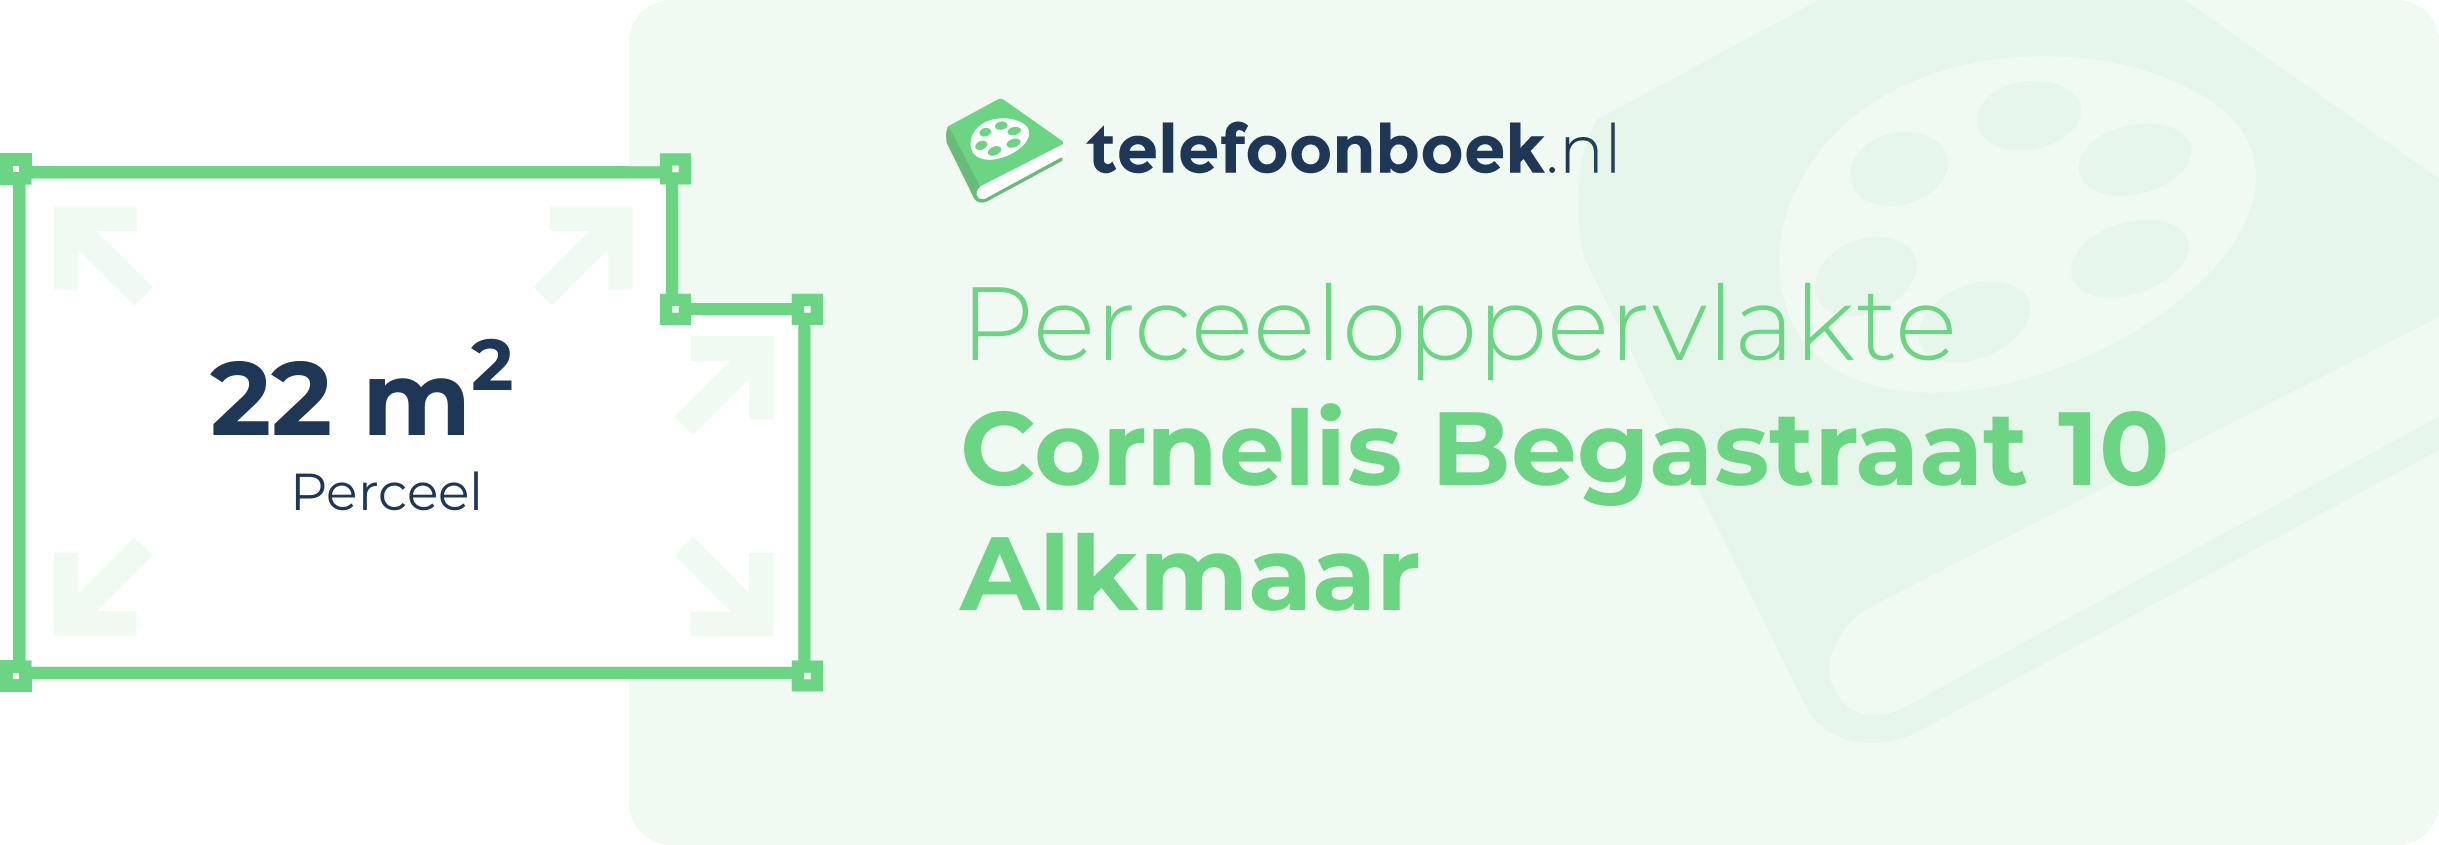 Perceeloppervlakte Cornelis Begastraat 10 Alkmaar